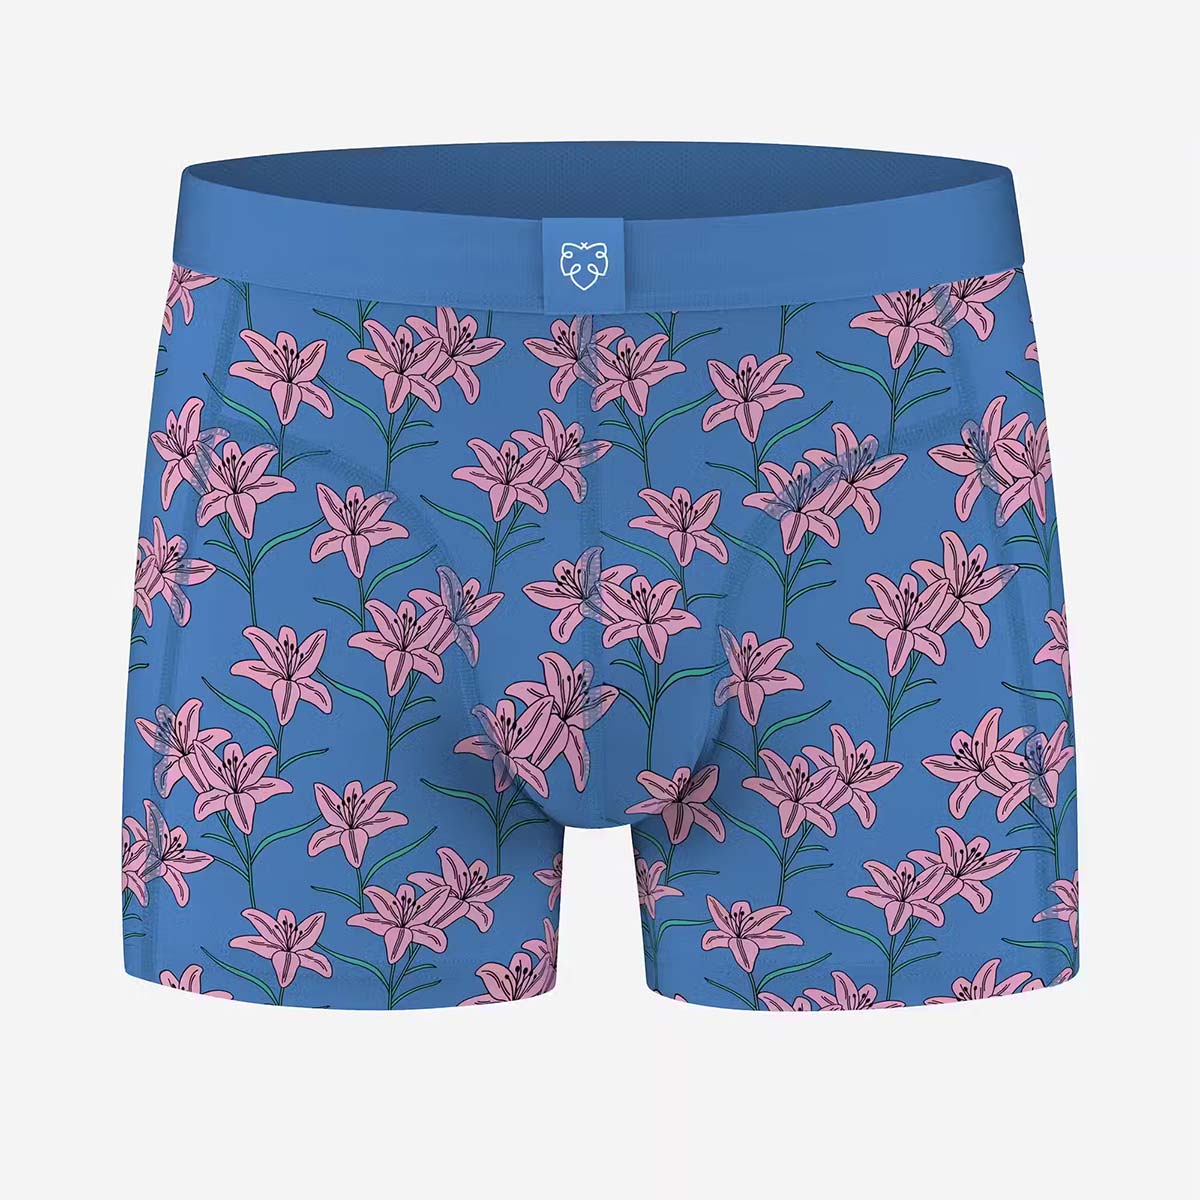 A-dam underwear boxer pants briefs pink flowers